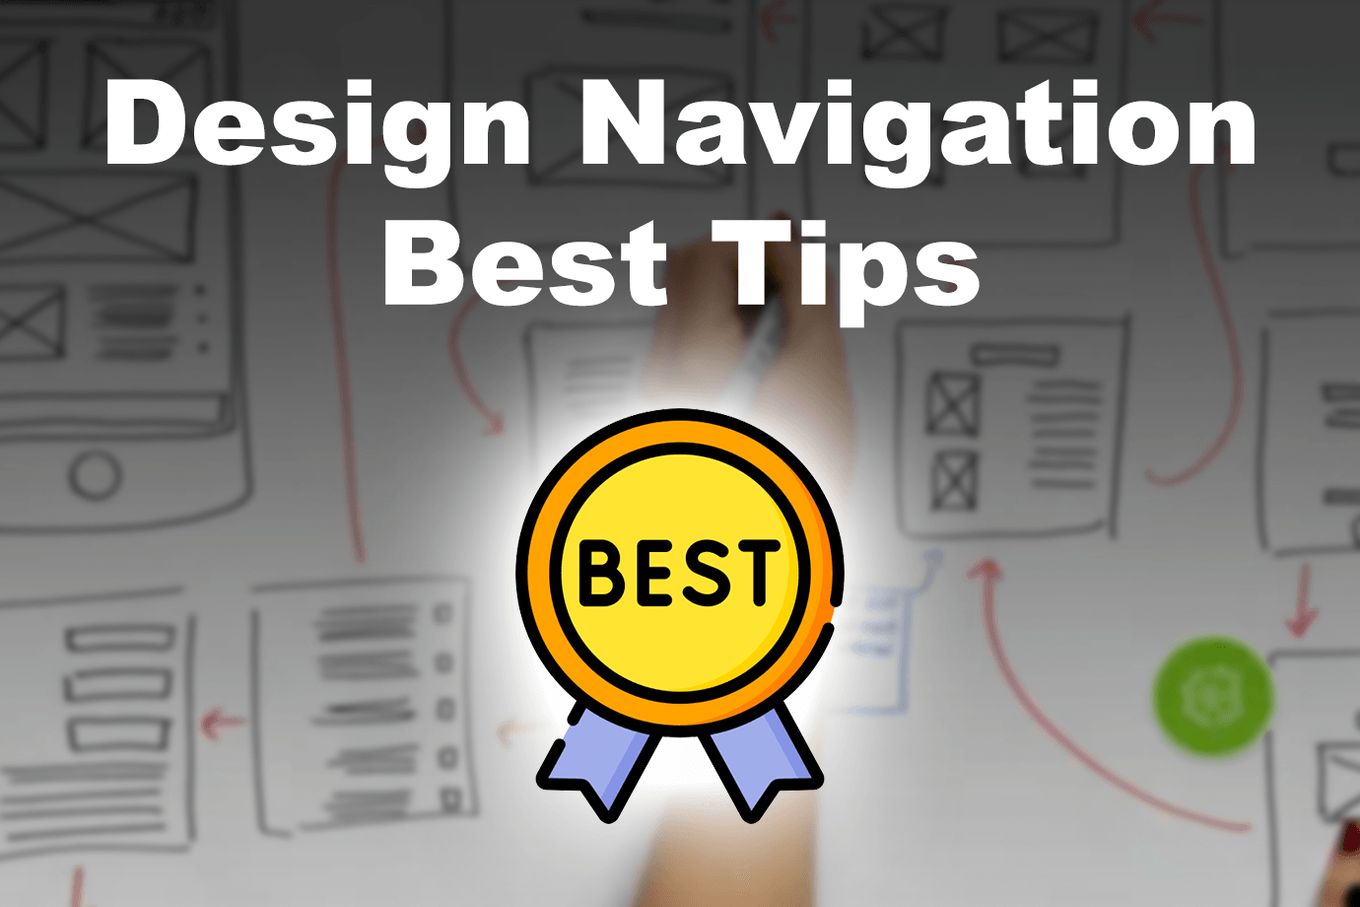 Design navigation - The Most Essential Principles